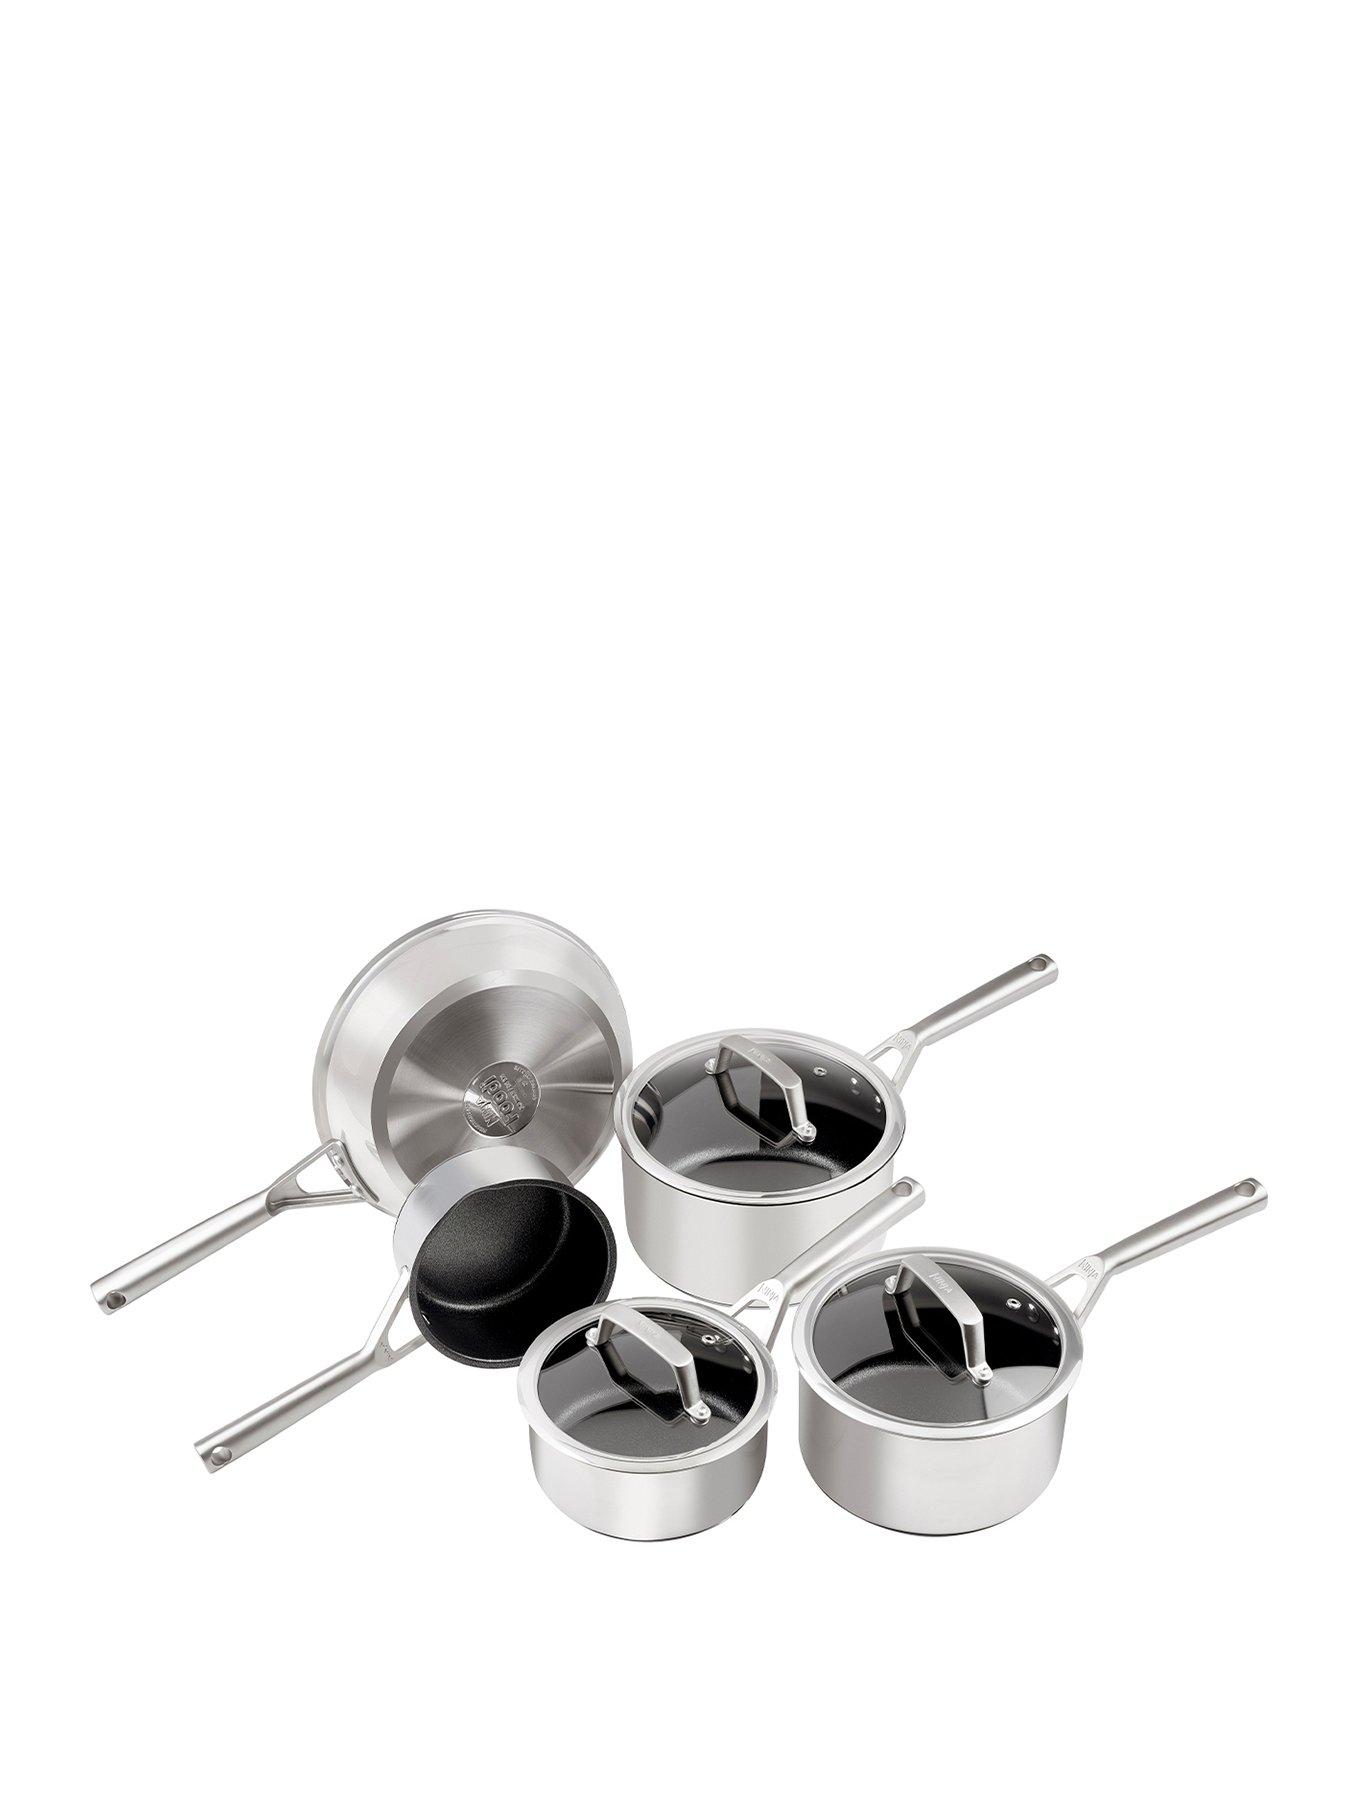  Ninja EverClad Stainless Steel Cookware 12 Piece Pots